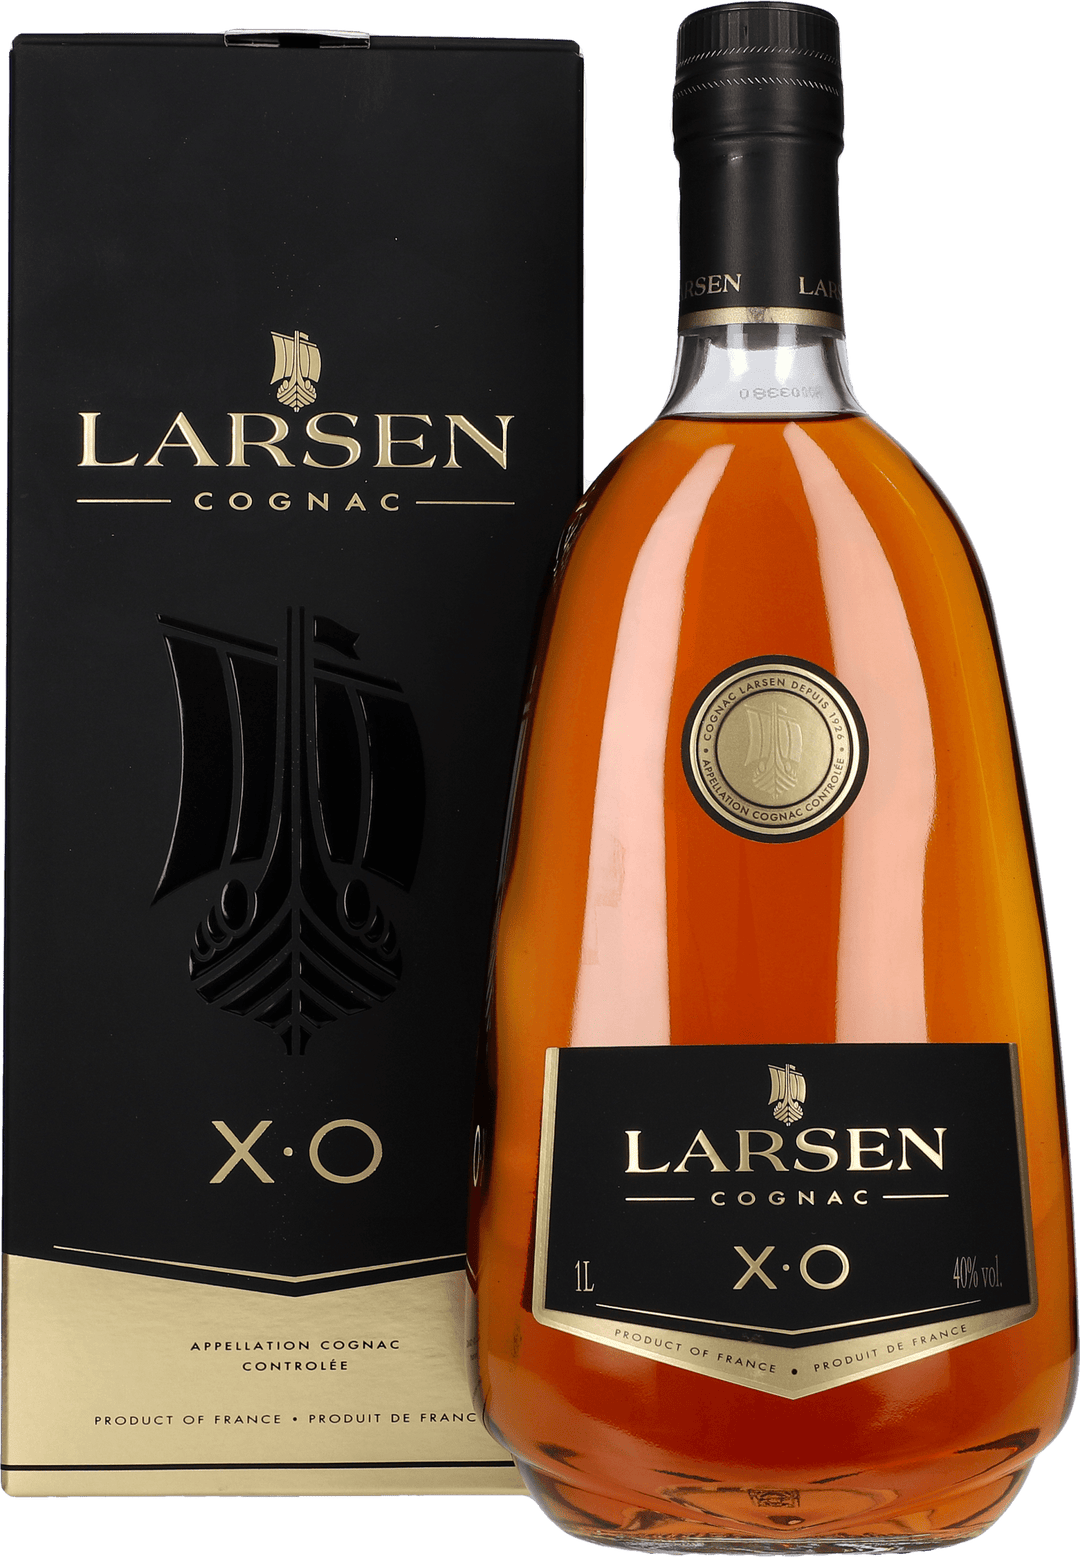 Larsen XO 40% 1 ltr. - AllSpirits